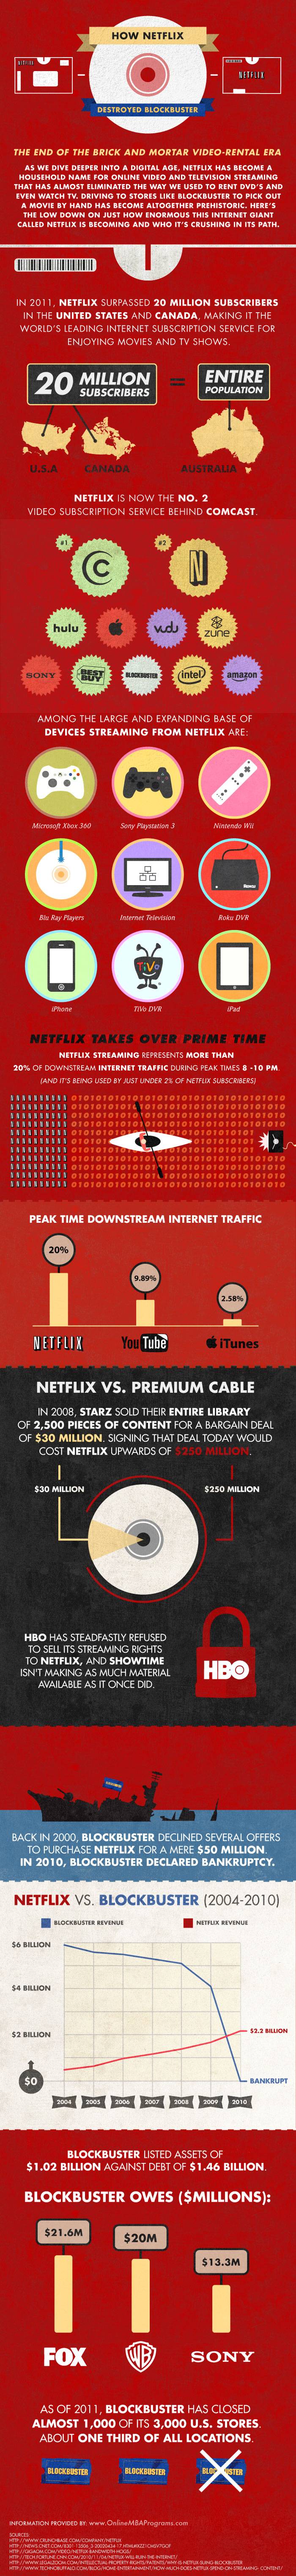 How Netflix Destroyed Blockbuster (Infographic)